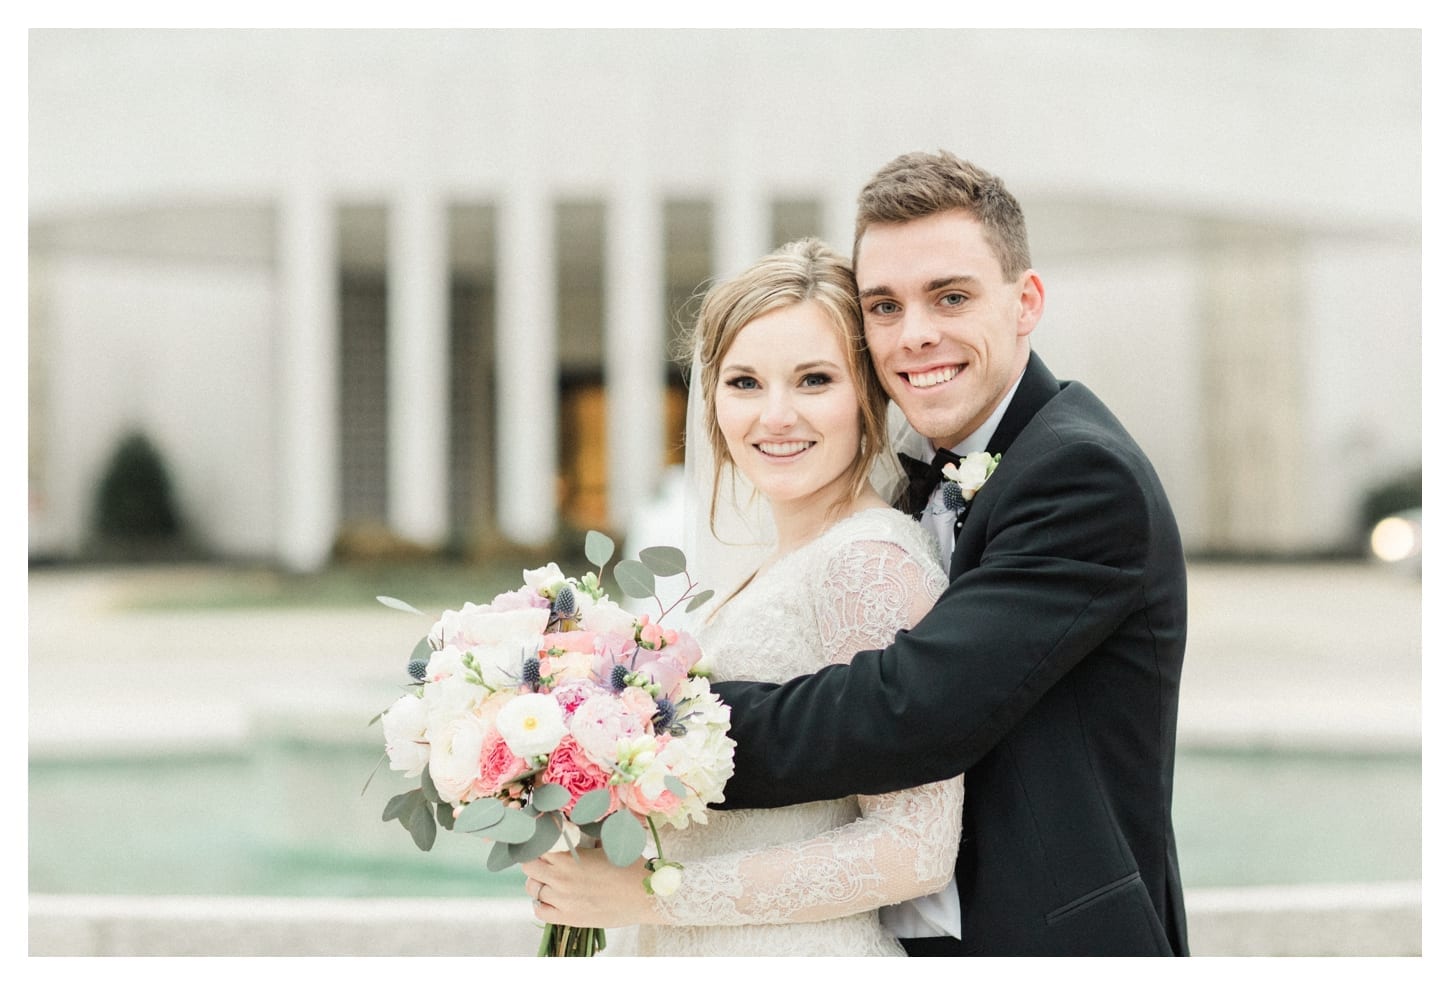 Washington D.C. LDS Temple wedding photographer